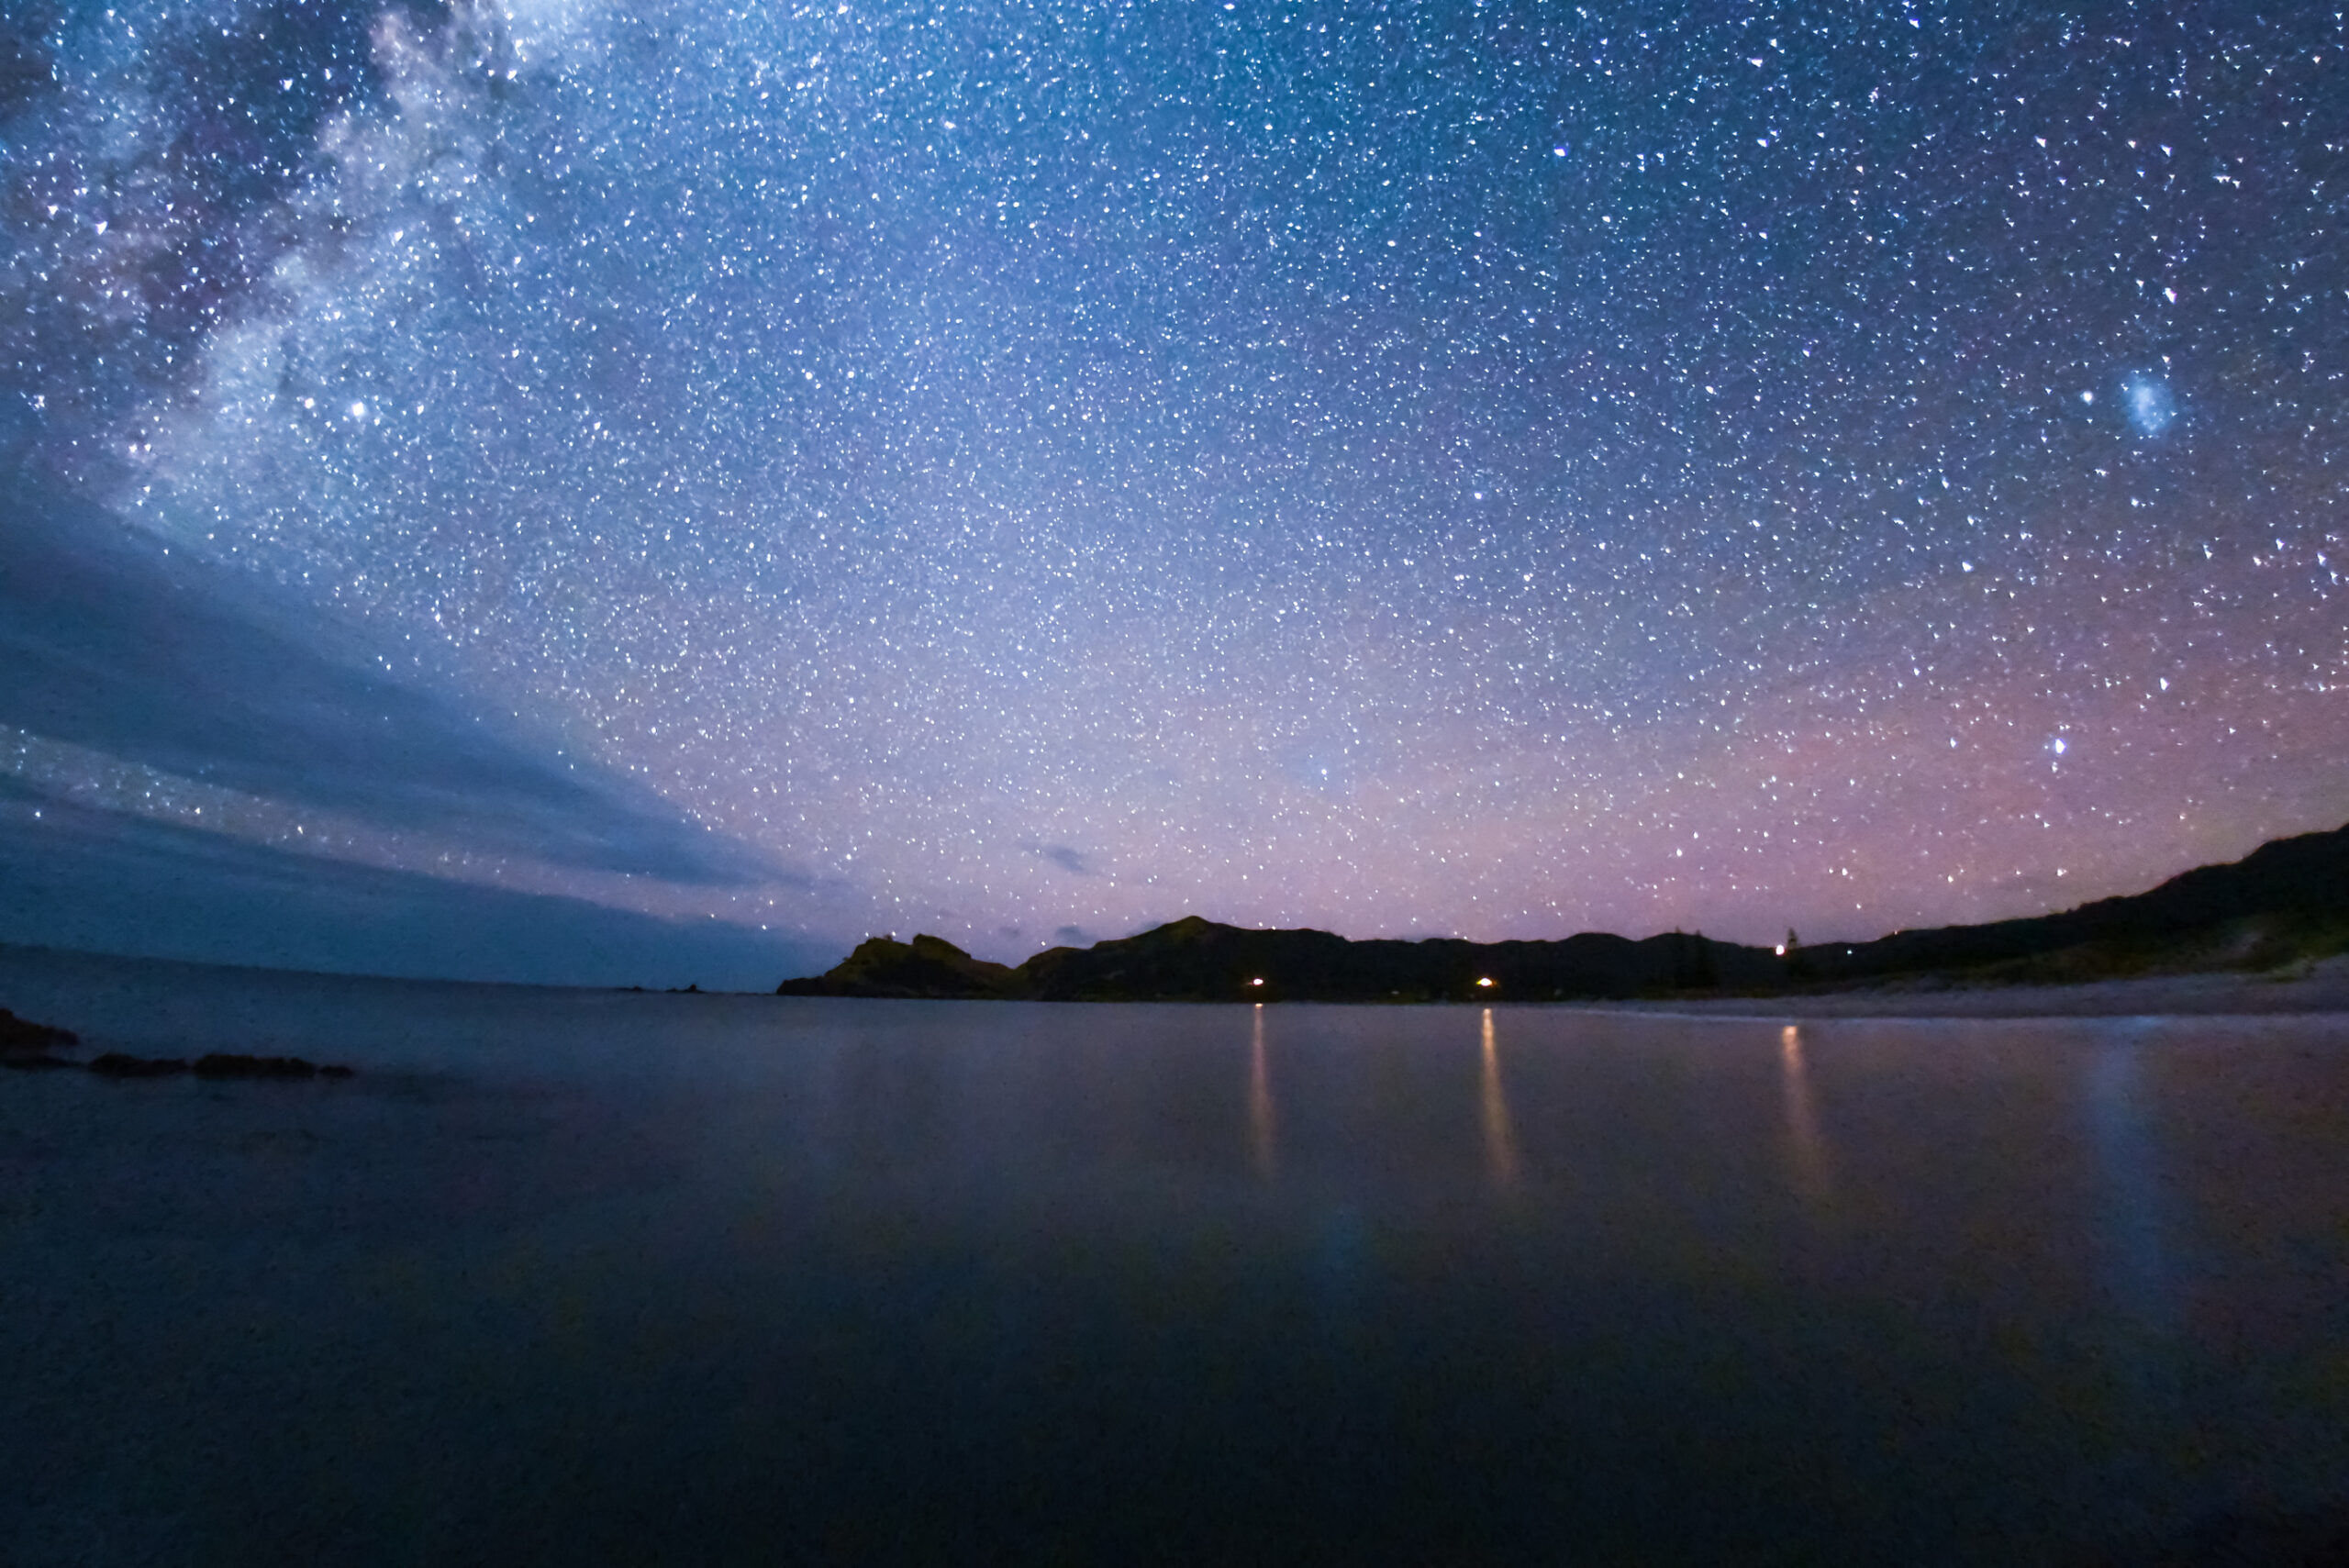 An Auckland Island Is Awarded Rare International Dark Sky Sanctuary Status